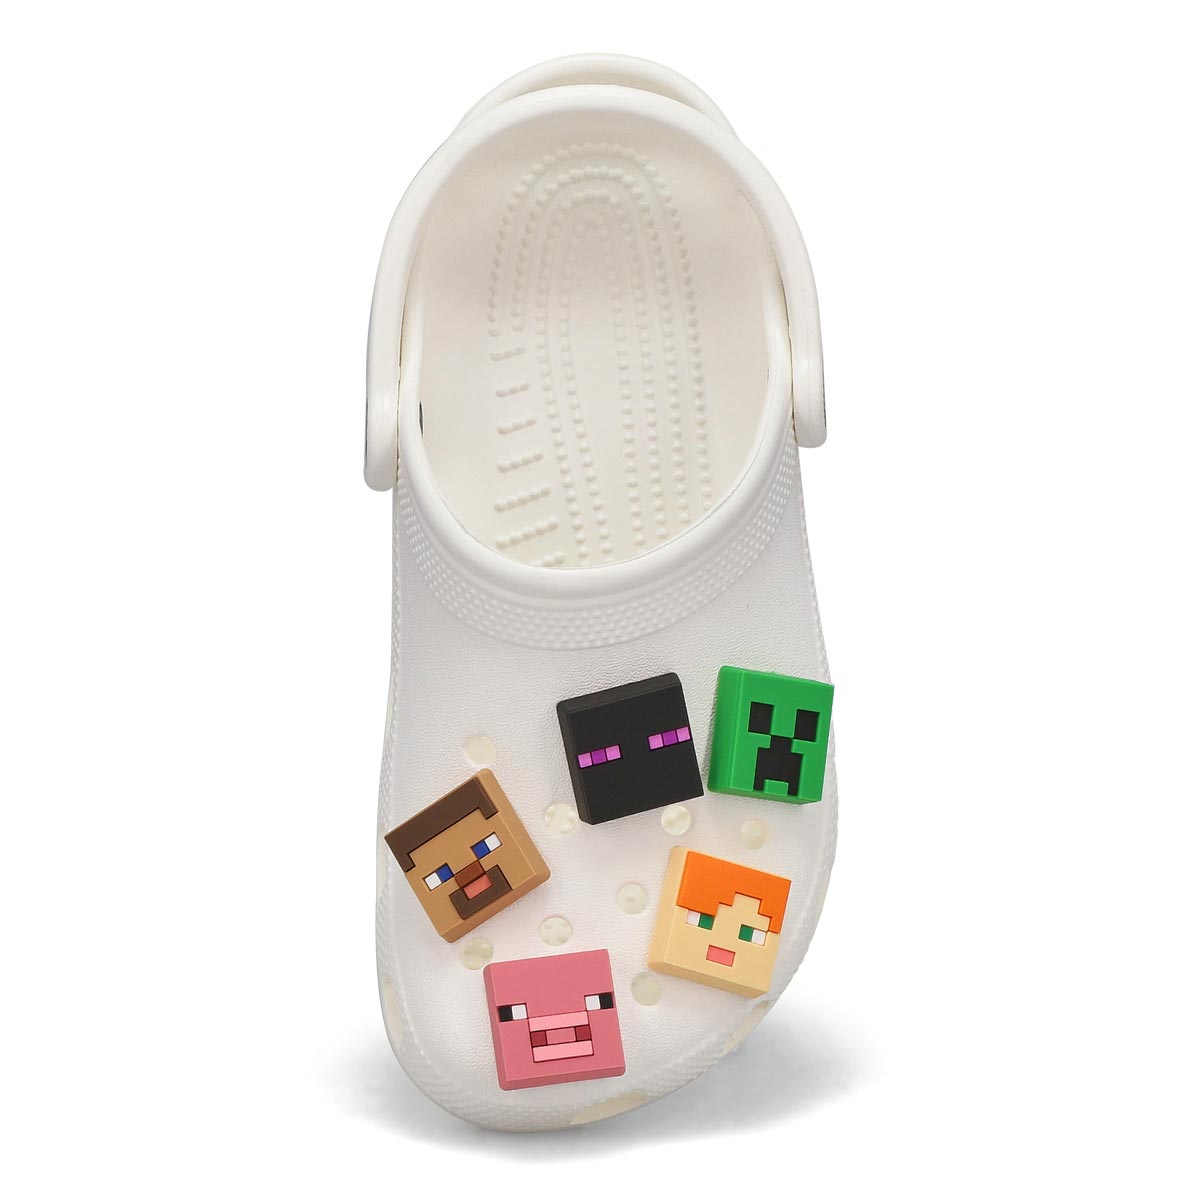 Crocs Minecraft Jibbitz Shoe Charms, 5 Pack 